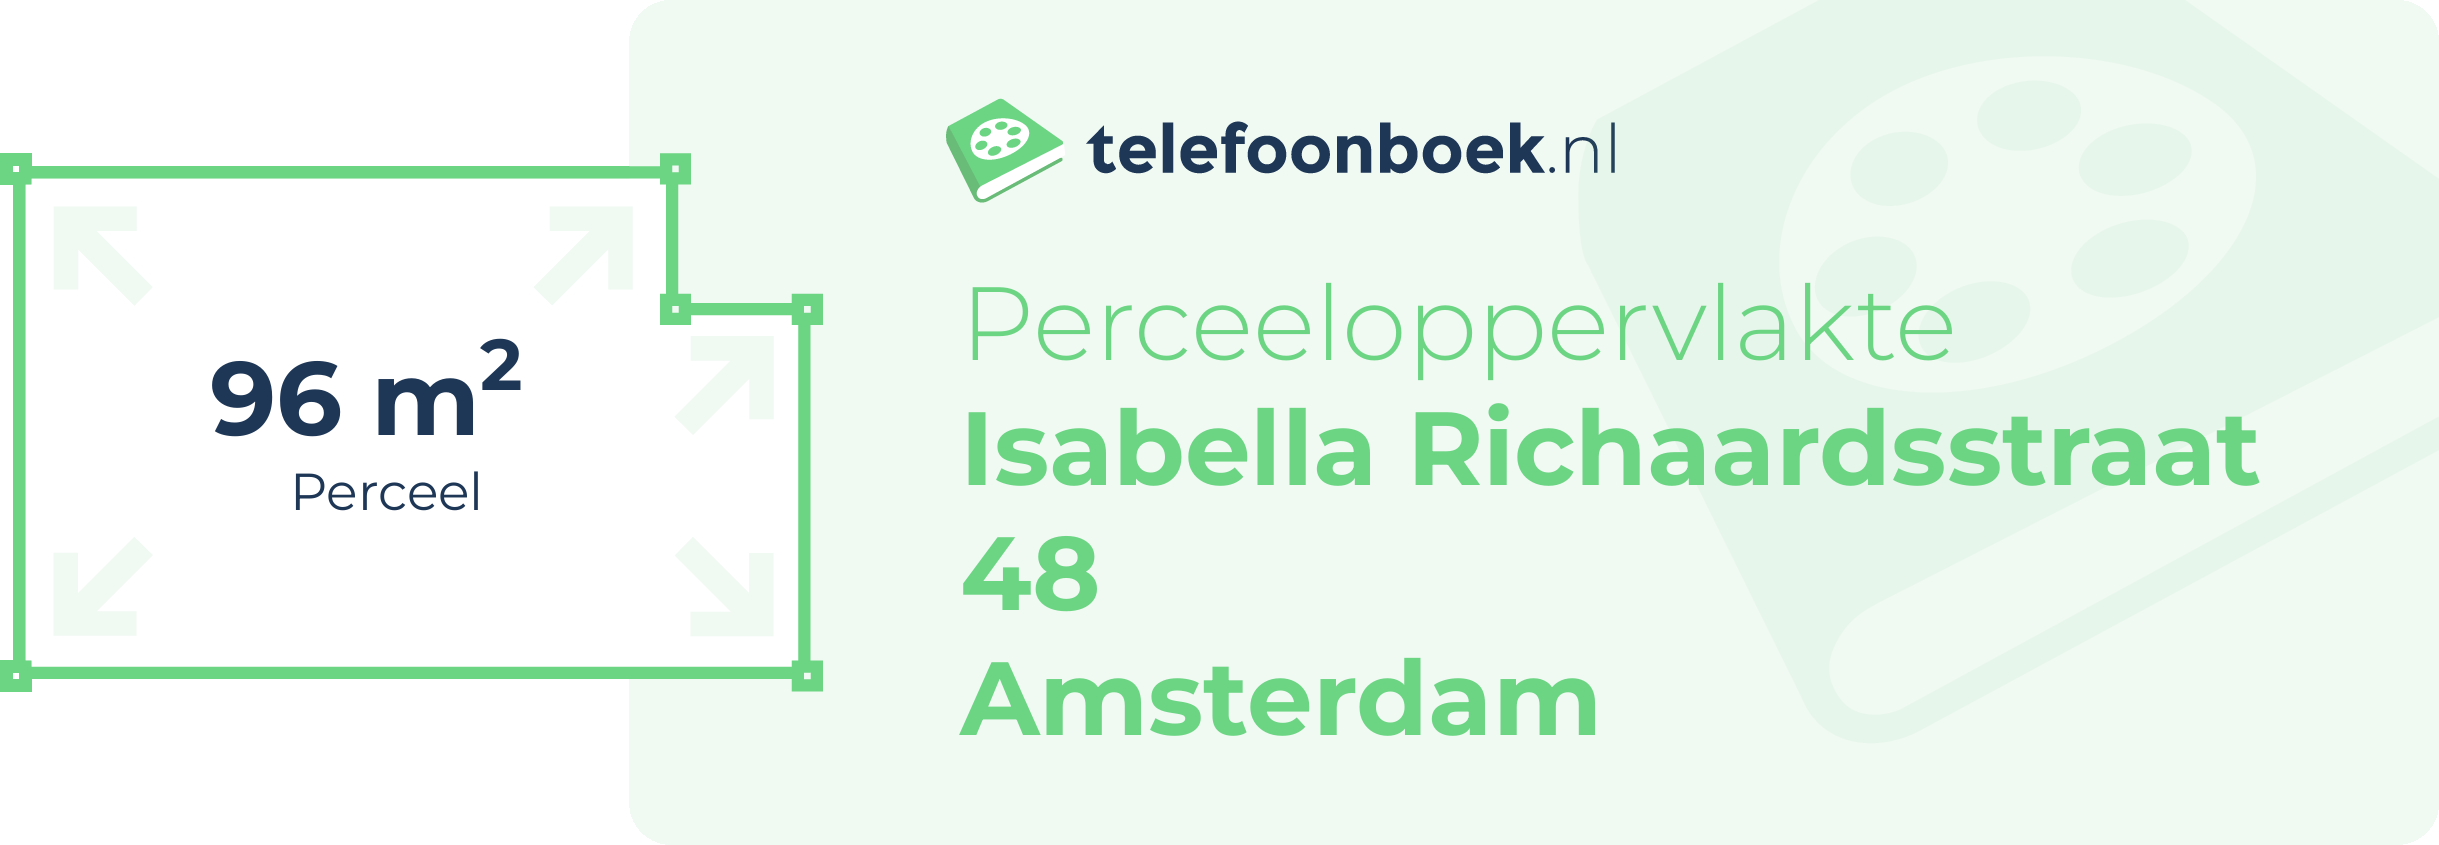 Perceeloppervlakte Isabella Richaardsstraat 48 Amsterdam